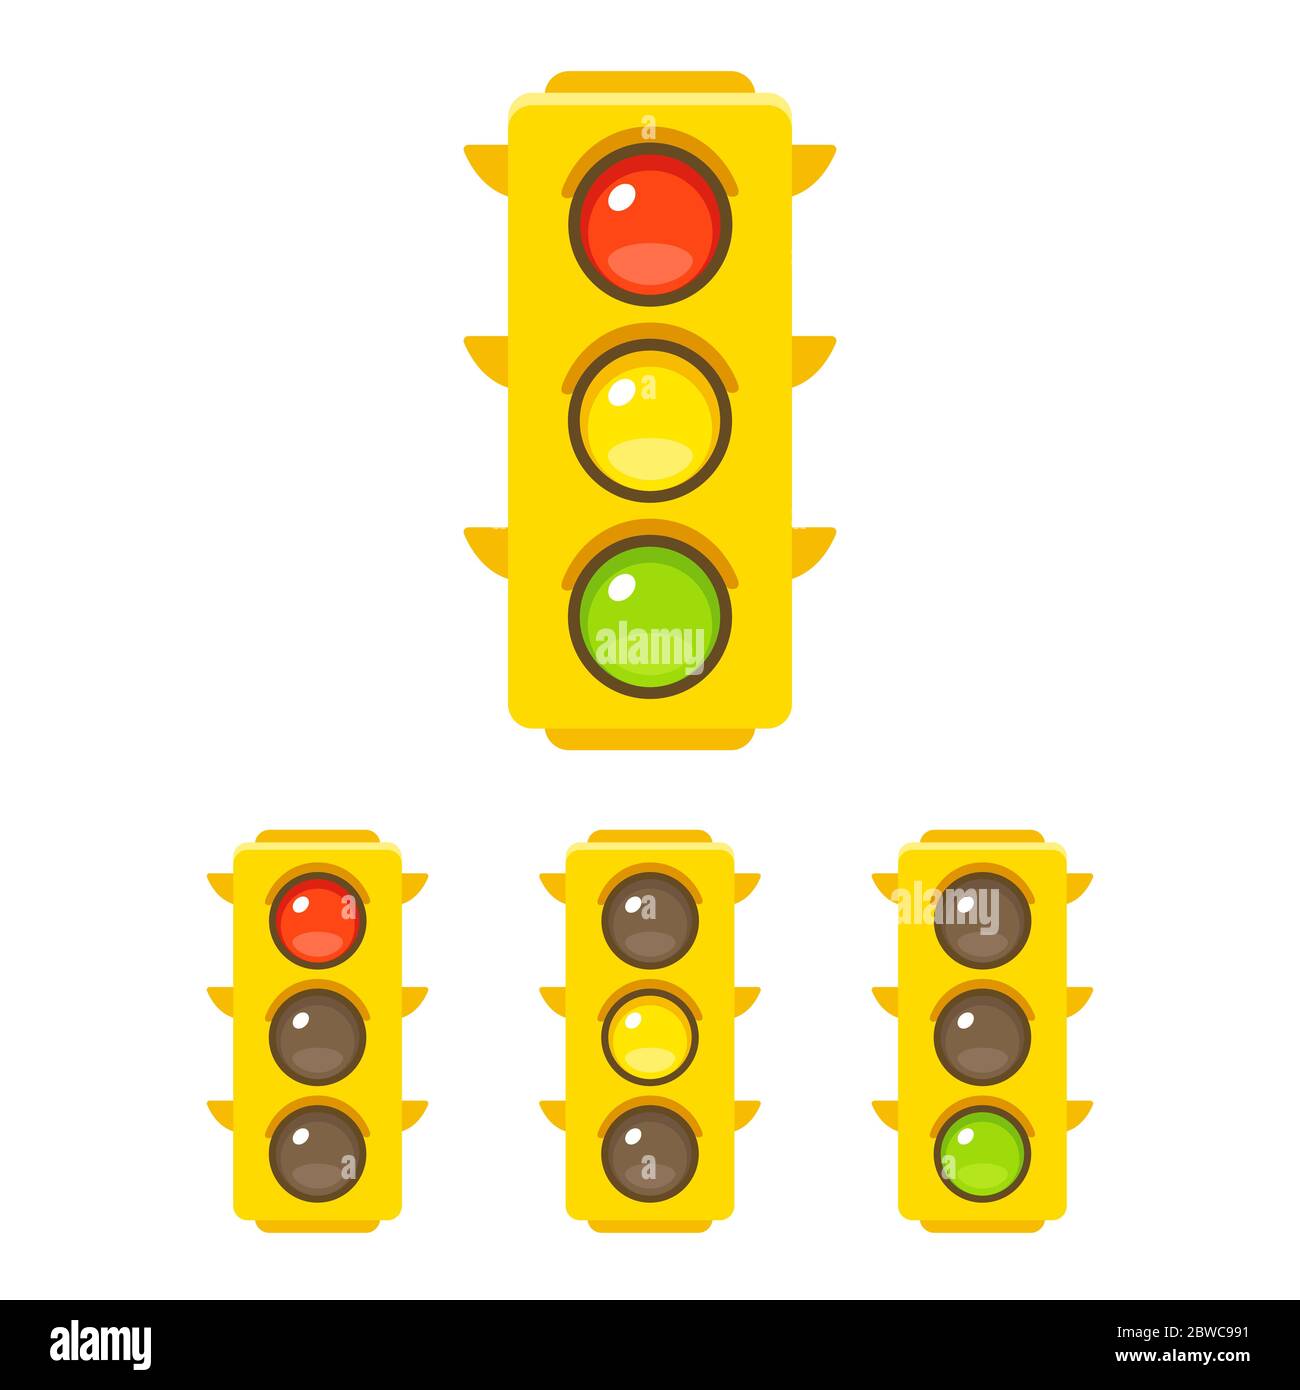 Ampelsymbol mit roter, gelber und grüner Ampel. Vektor Clip Art Illustration in einfachen flachen Cartoon-Stil. Stock Vektor